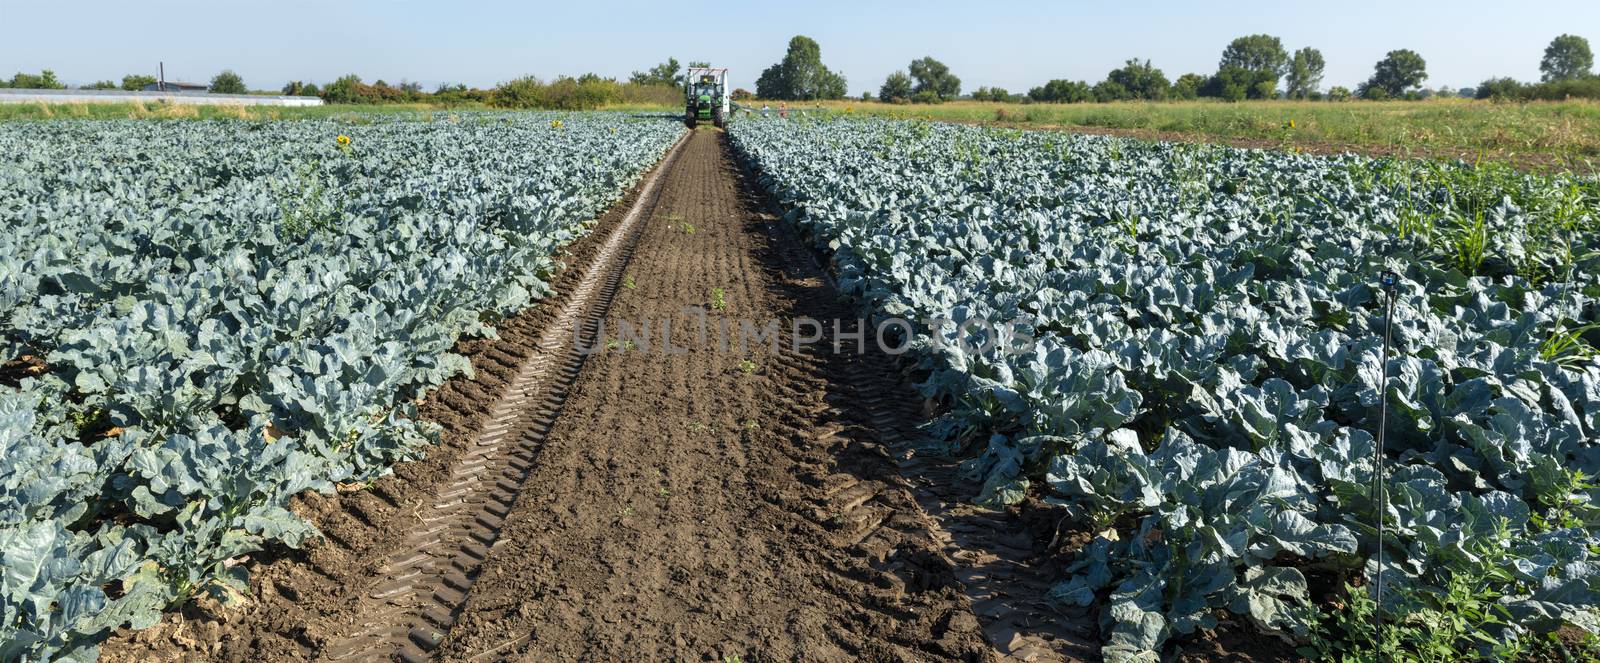 Tractor in broccoli farmland. Big broccoli plantation. Concept f by deyan_georgiev